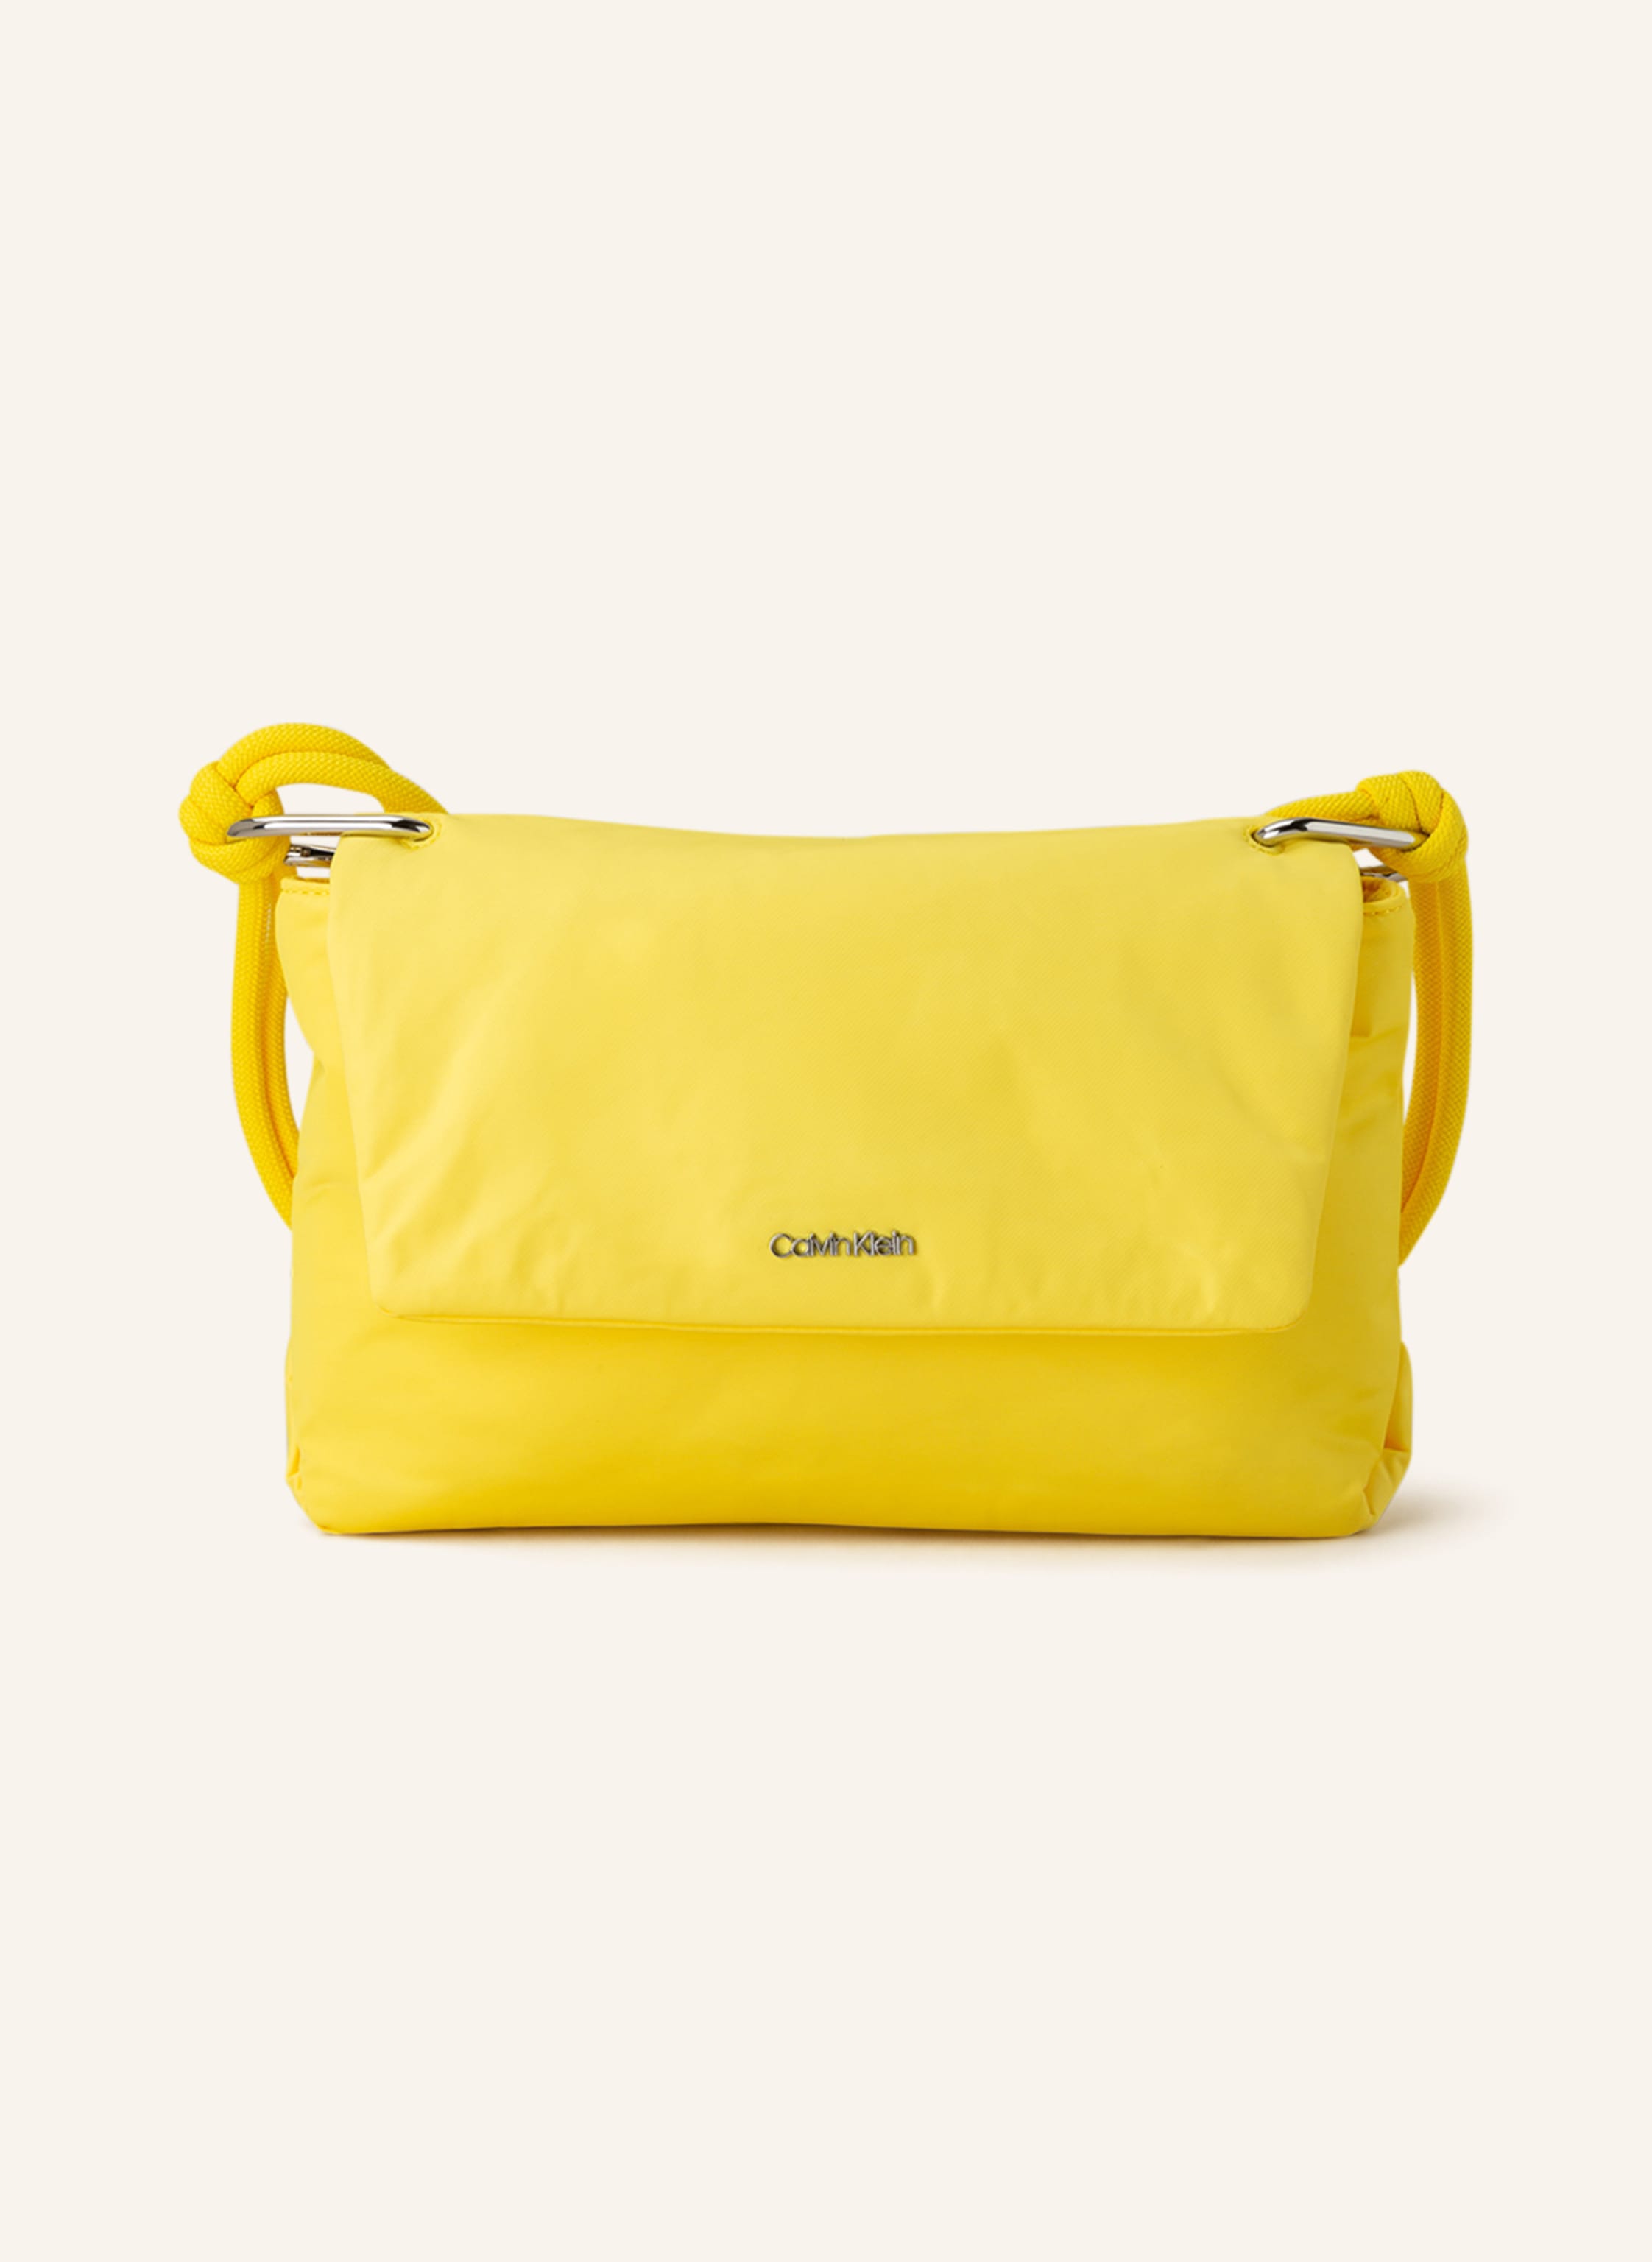 Calvin Klein Handbag in yellow | Breuninger